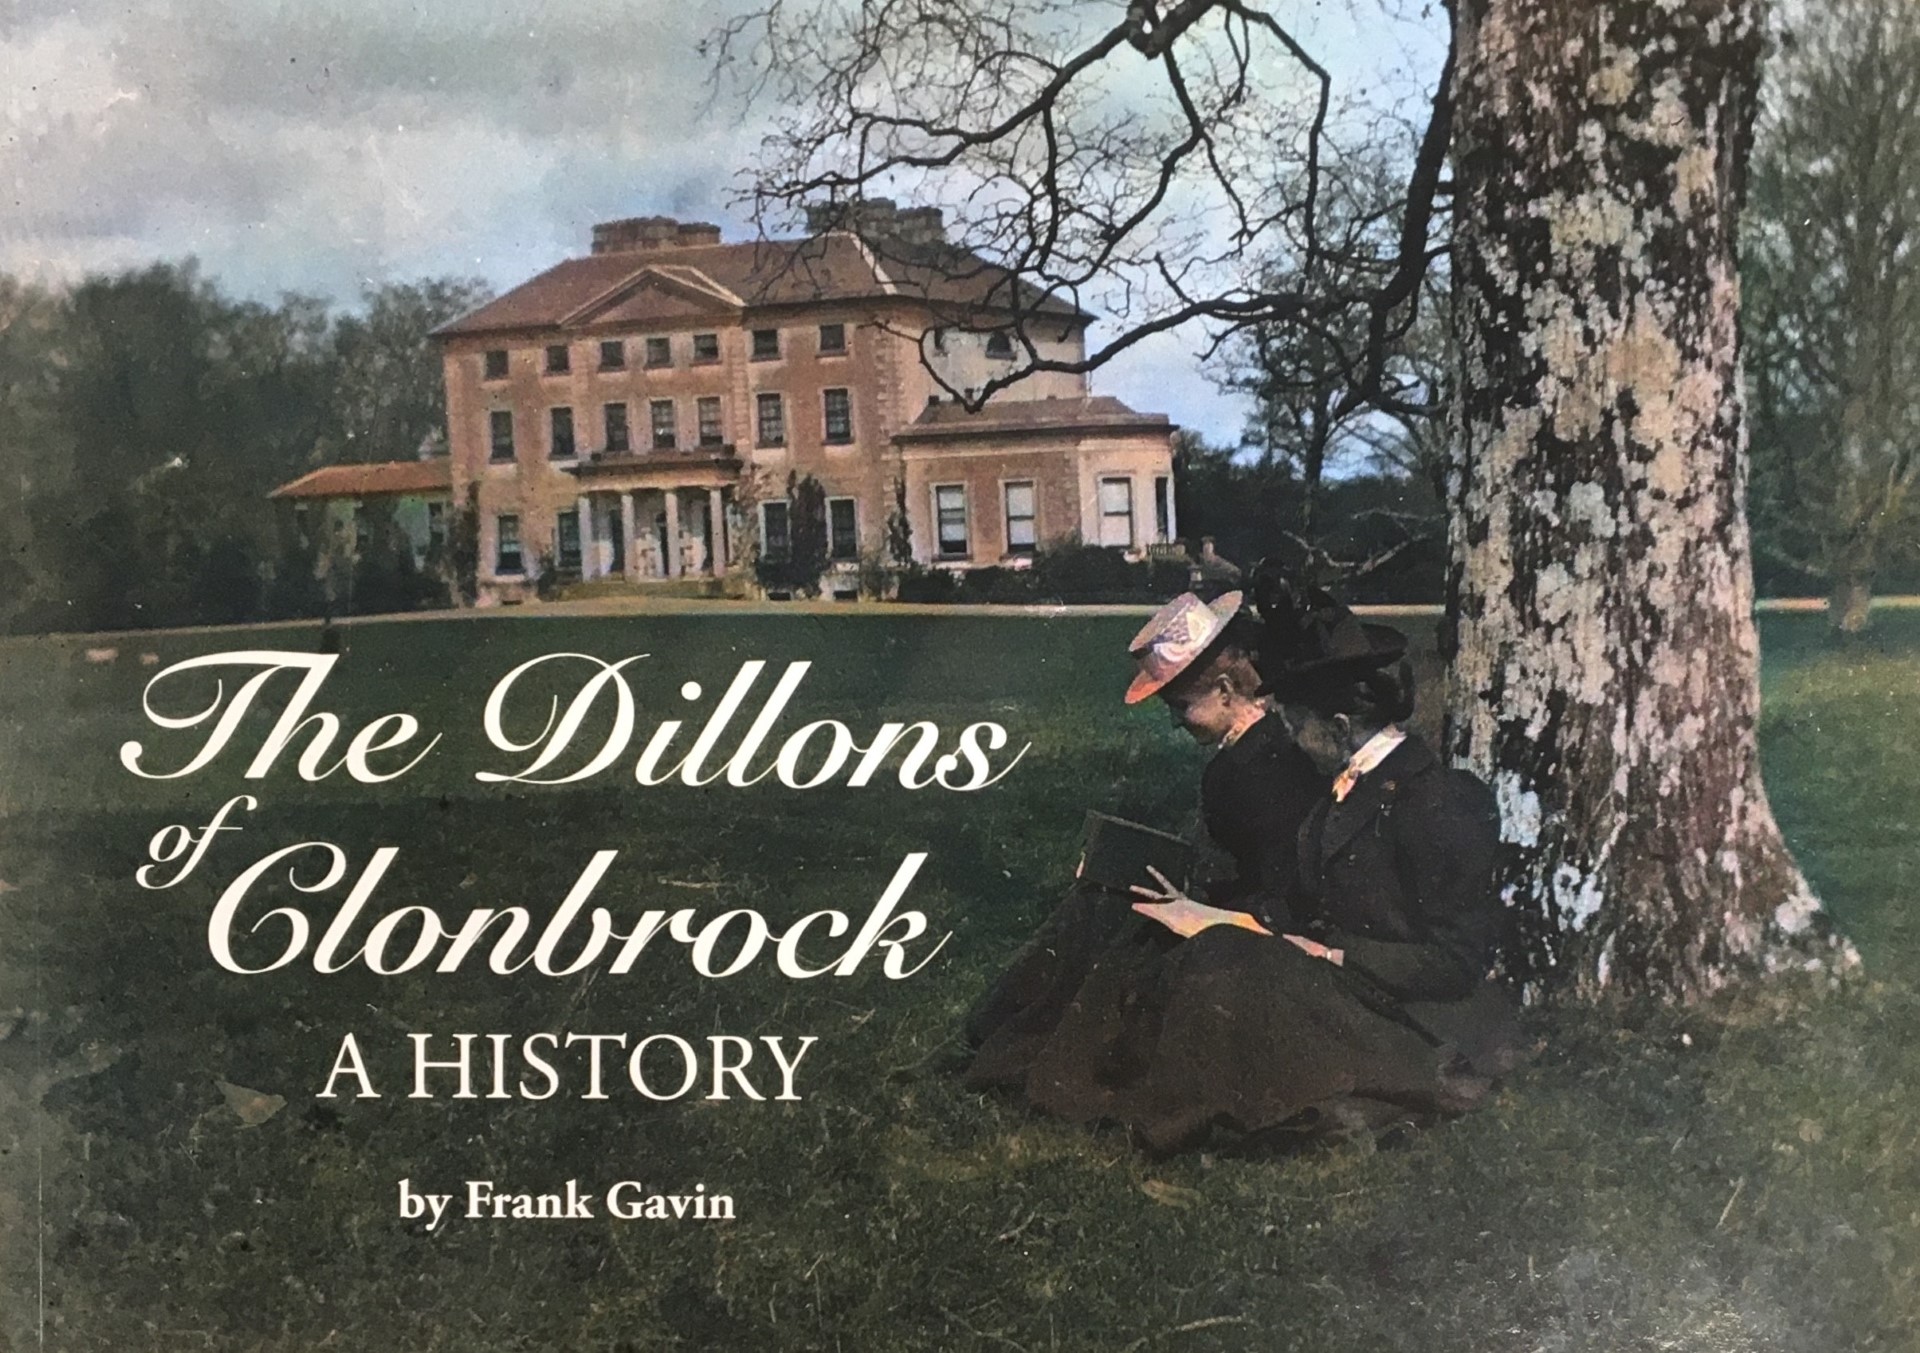 The Dillons of Clonbrock : A History | Frank Gavin | Charlie Byrne's